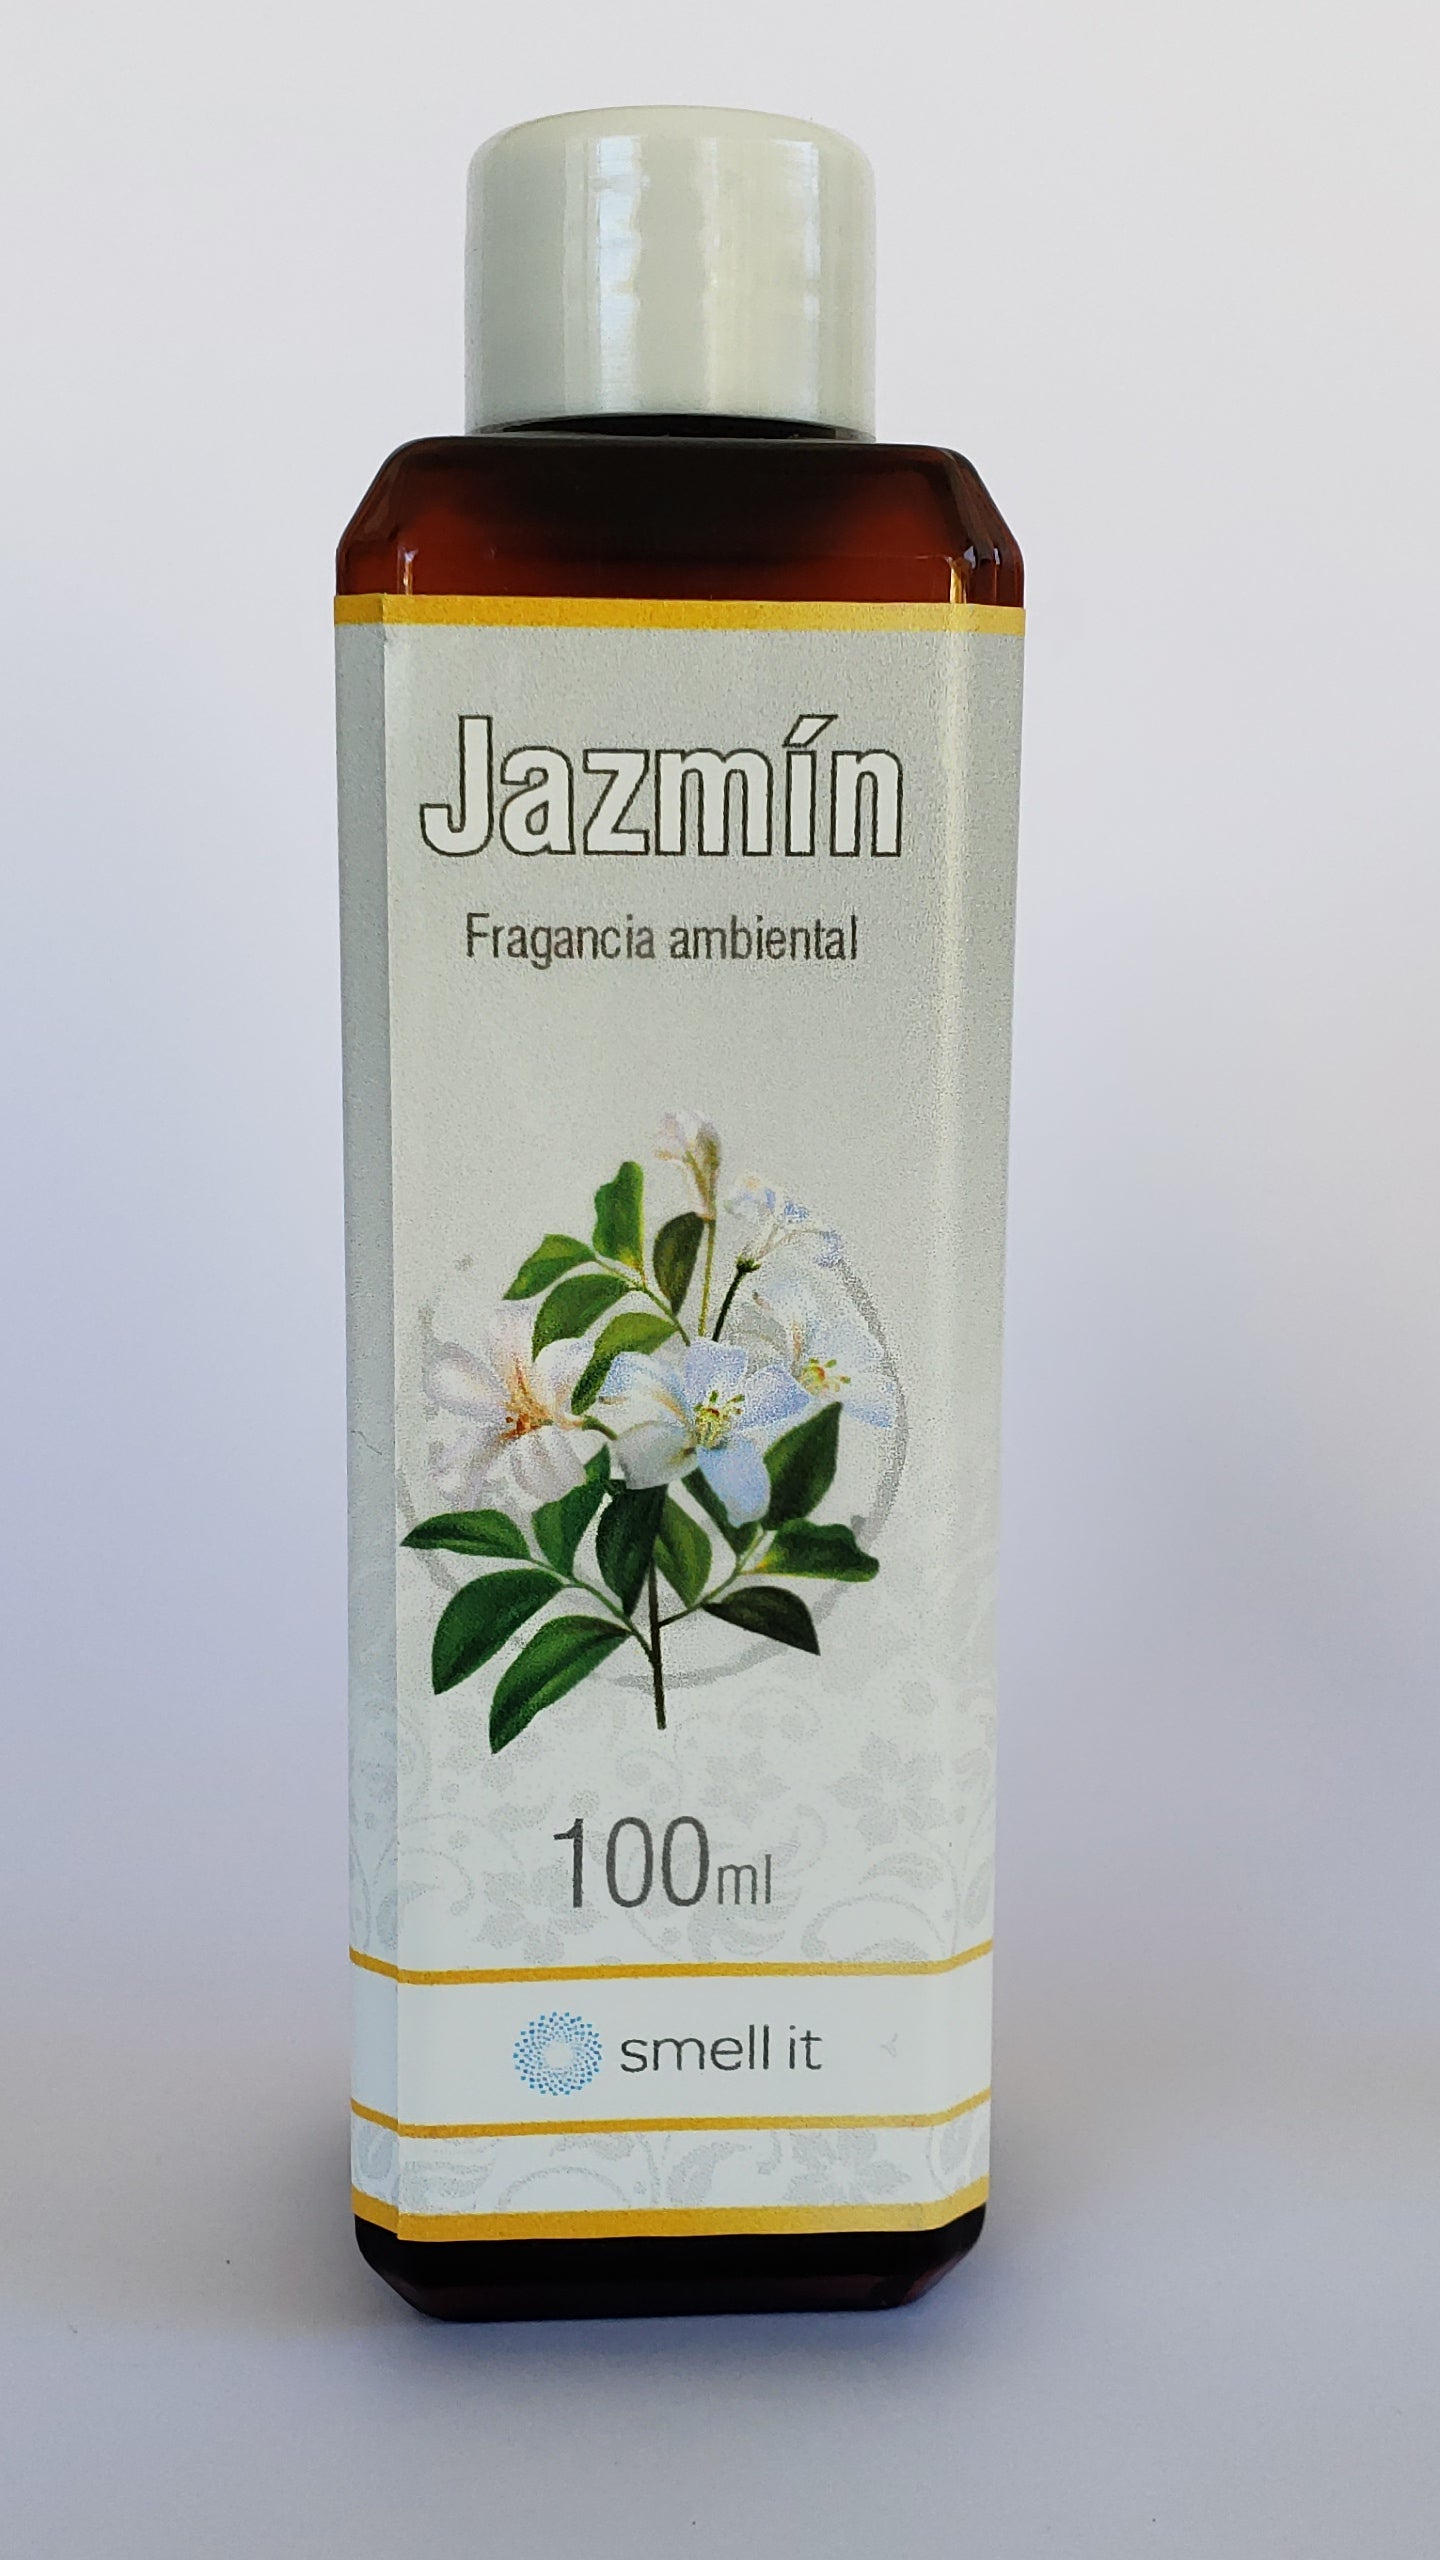 Fragancia Ambiental - Jazmin